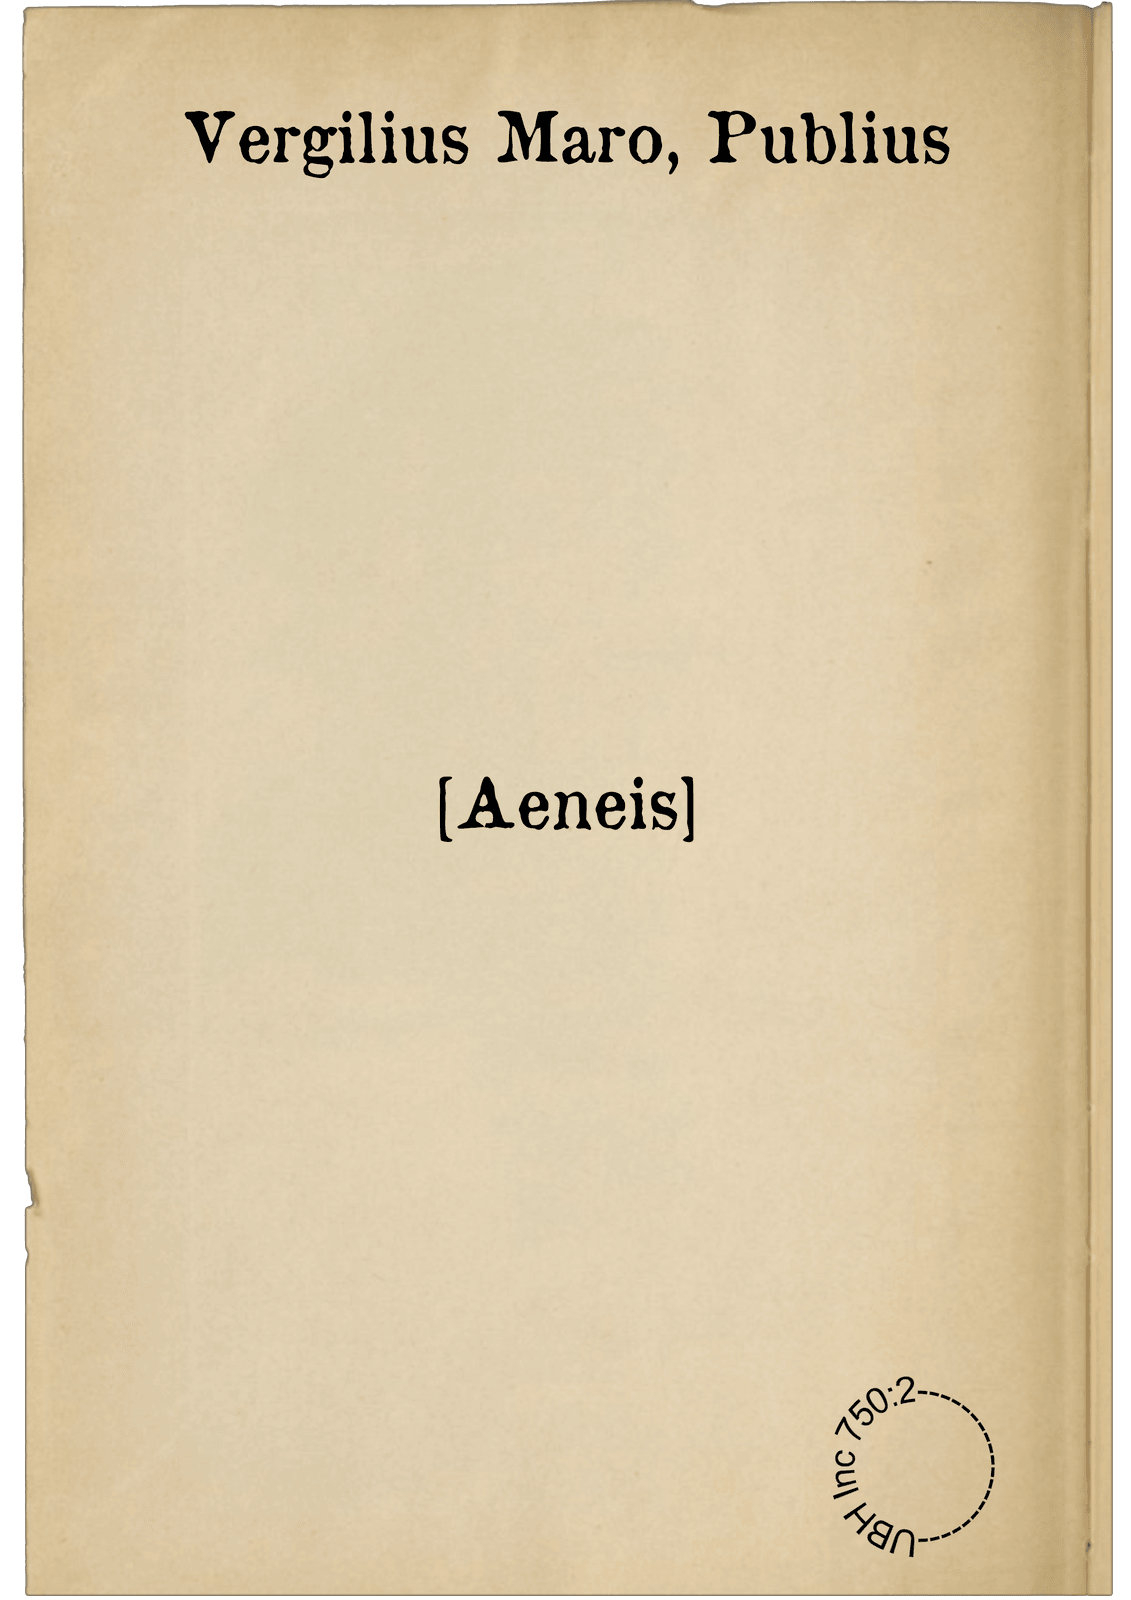 [Aeneis]